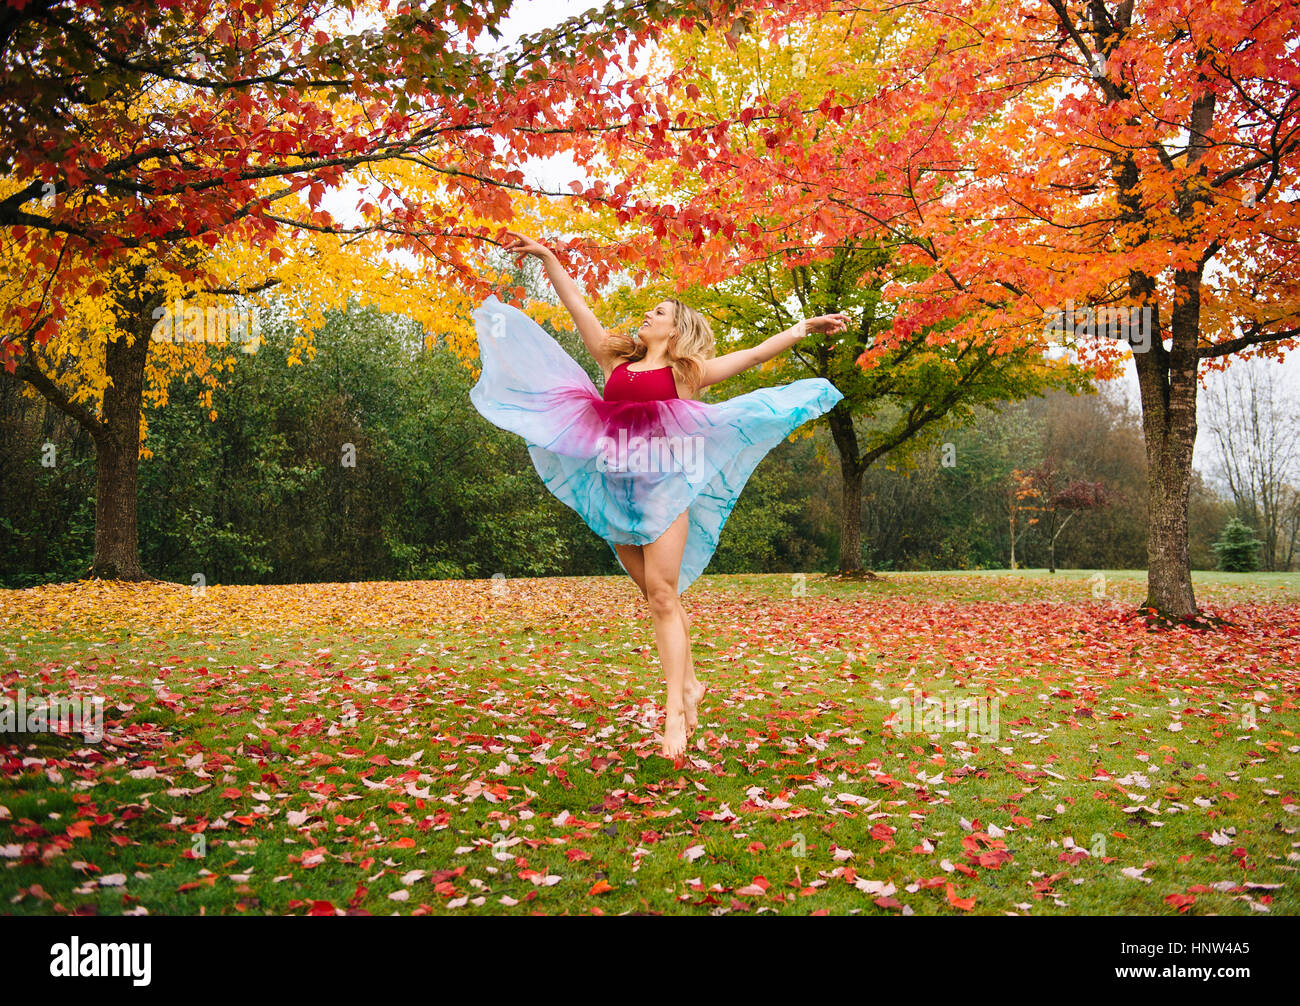 Caucasian ballerina dancing in autumn leaves in park Banque D'Images